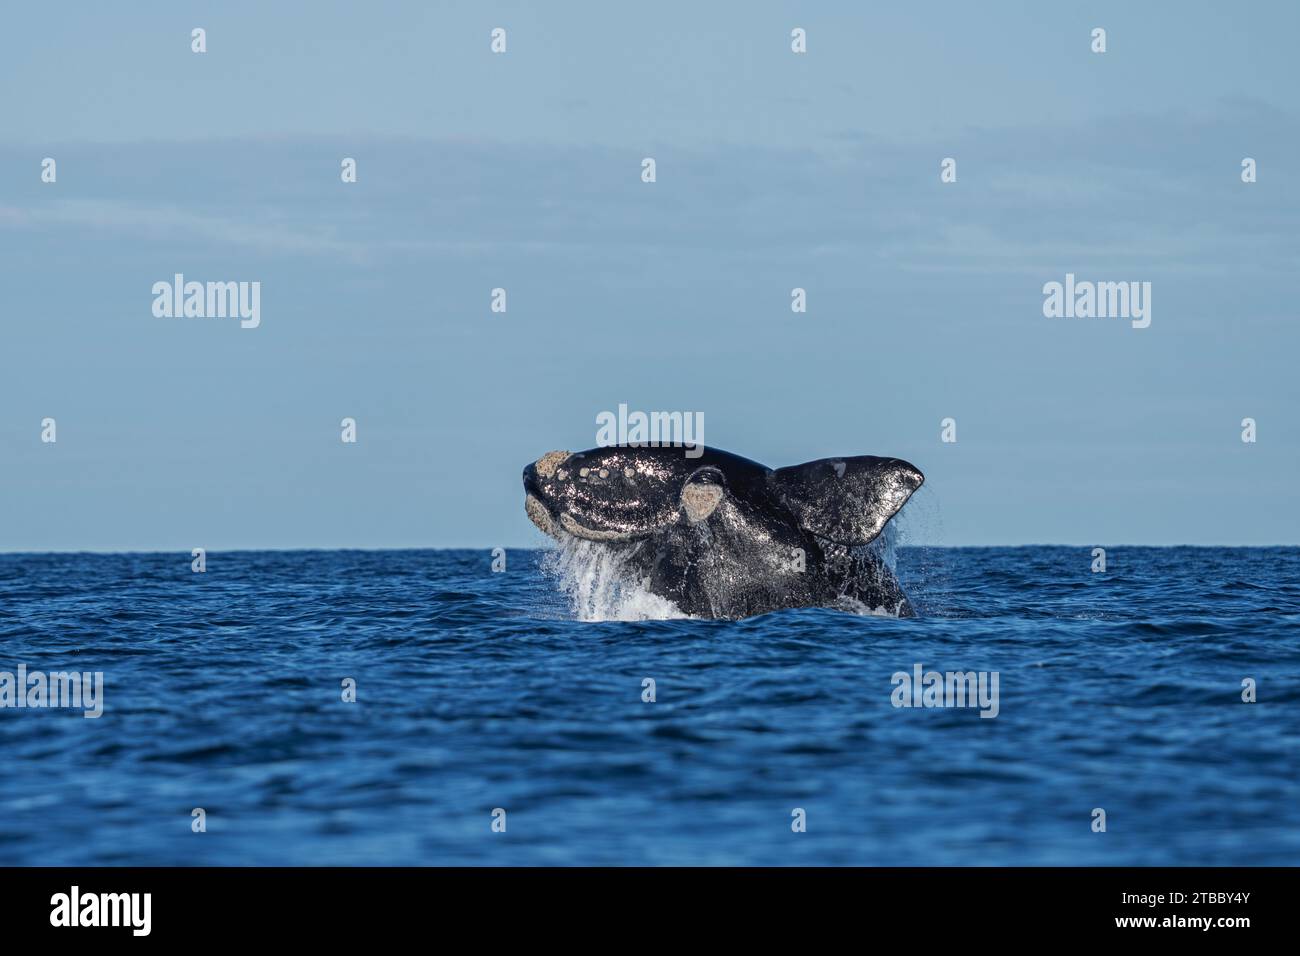 Southern right whales near Valdés peninsula. Behavior of right whales on surface. Marine life near Argentina coast. Stock Photo